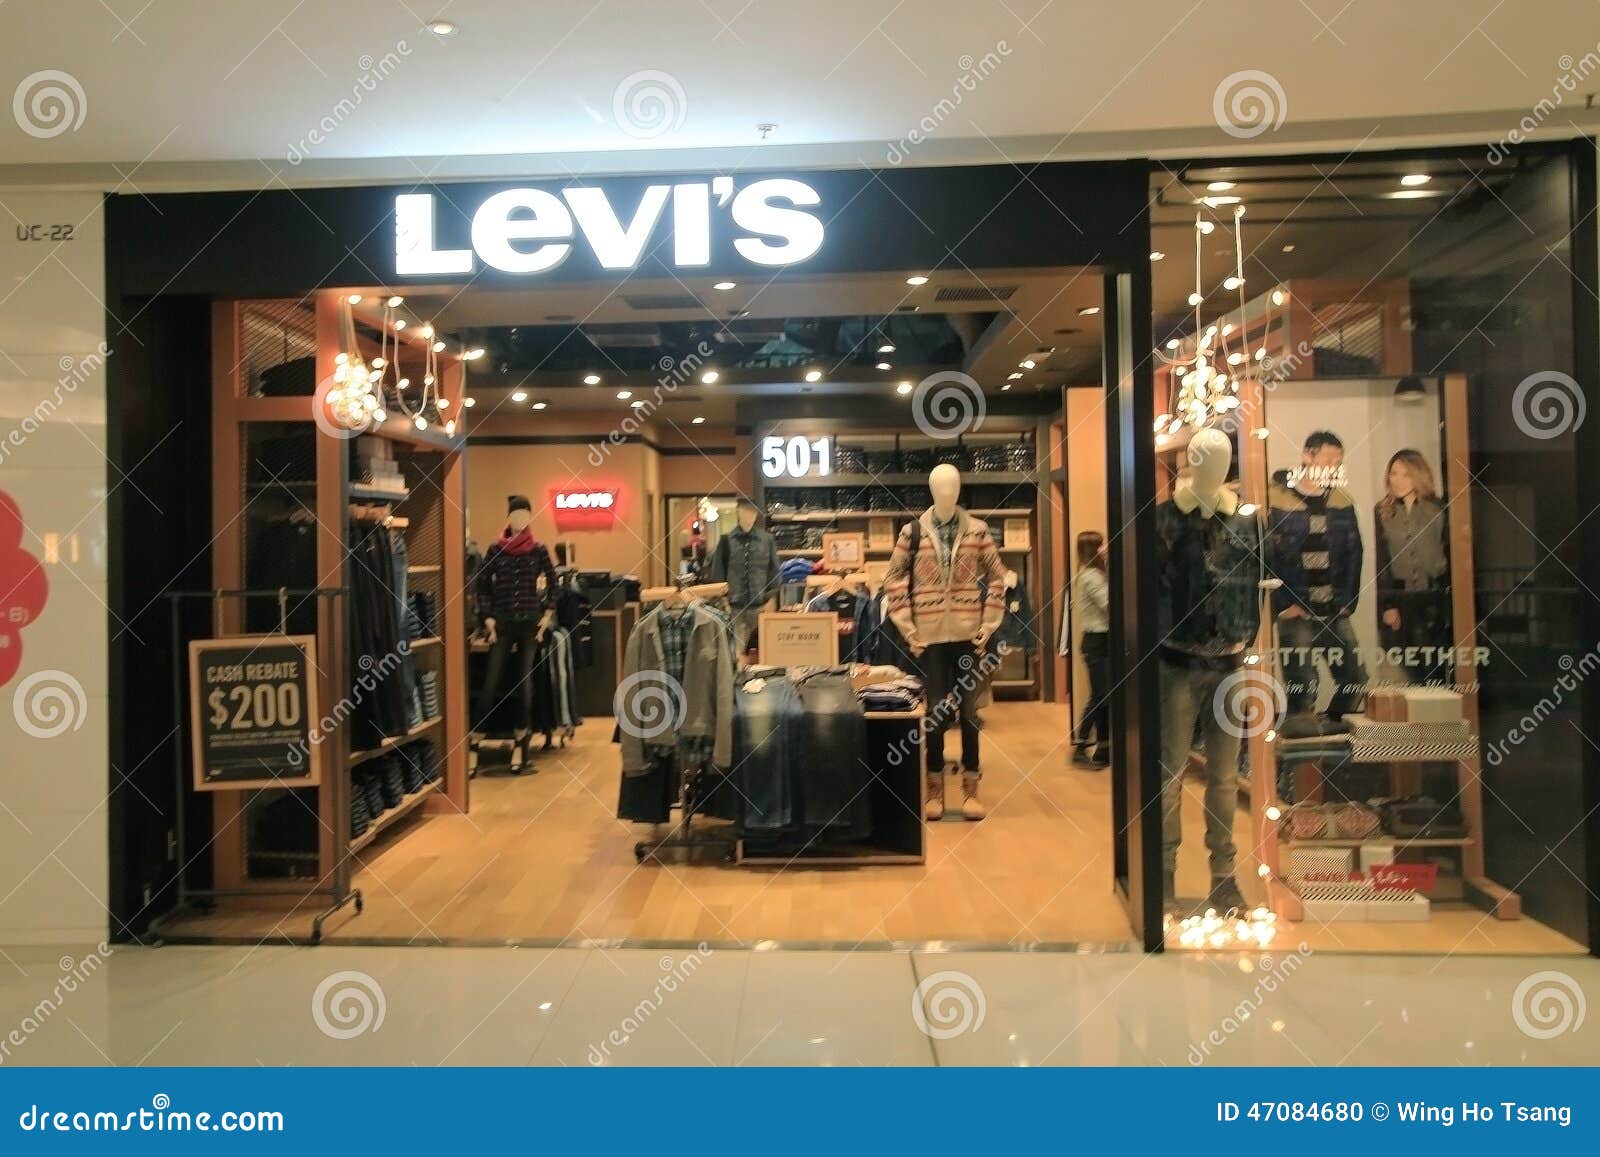 levi's clothing store near me